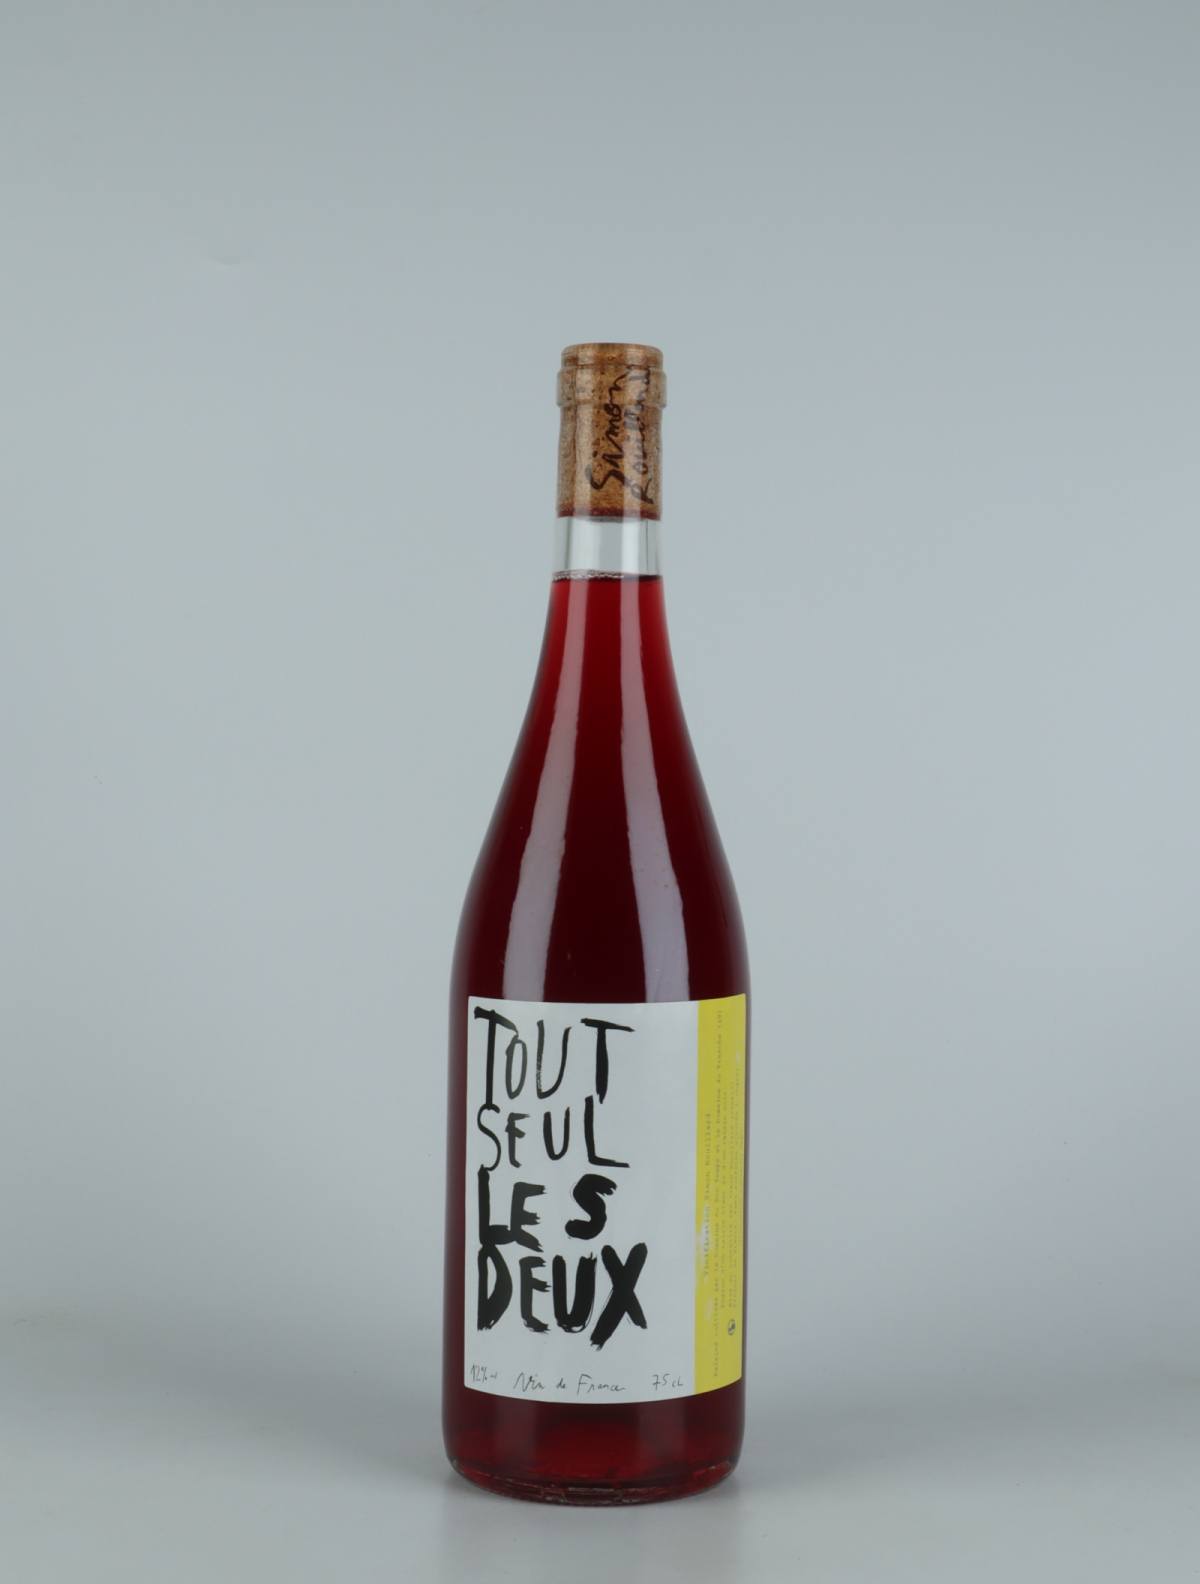 A bottle 2021 Tout seul les deux Red wine from Simon Rouillard, Loire in France